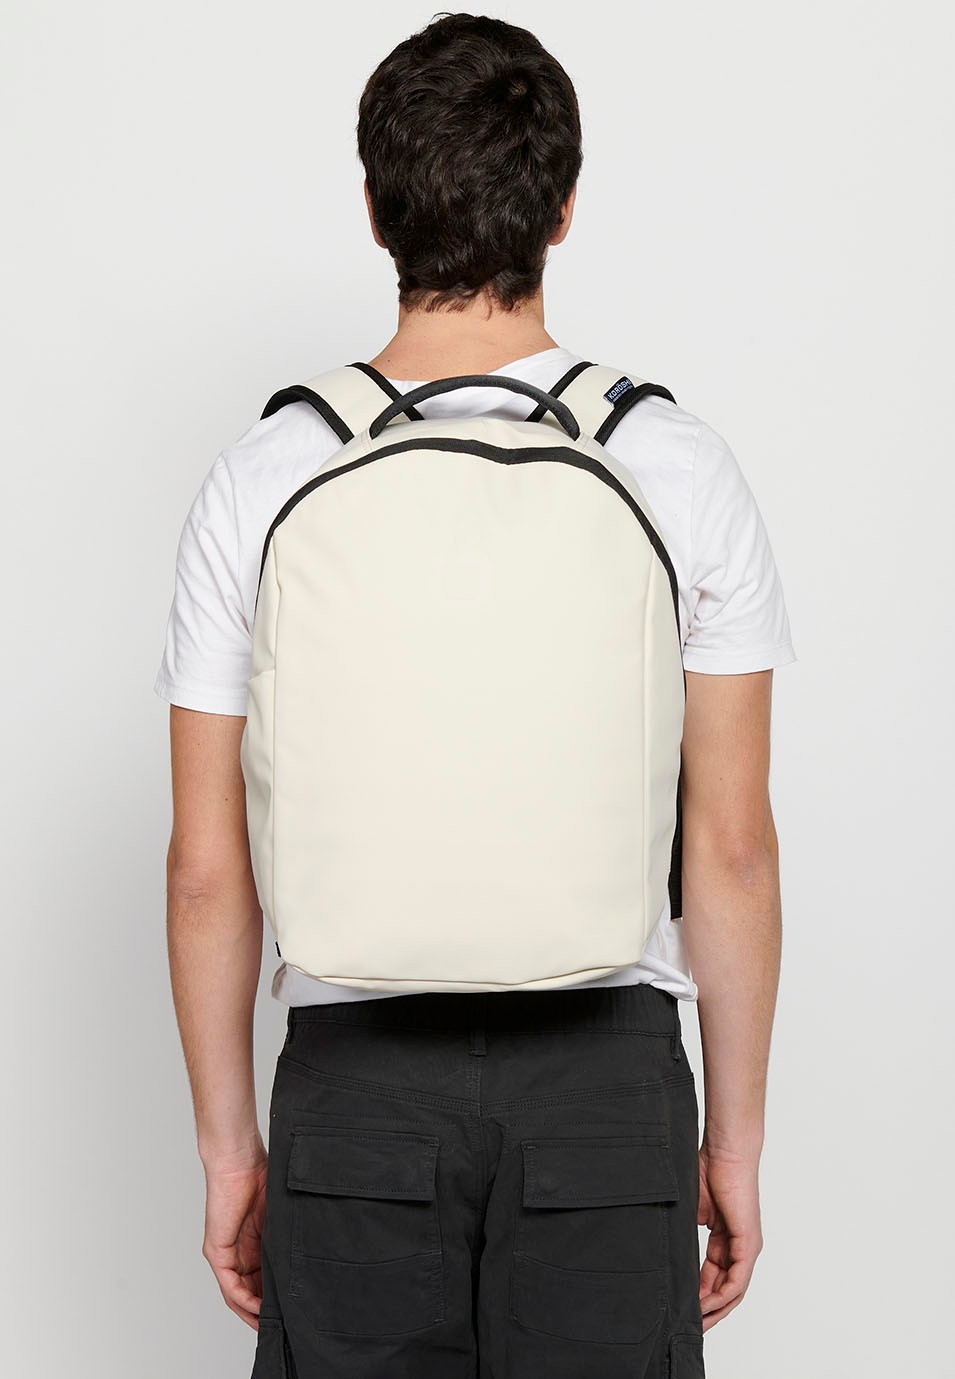 Koröshi Backpack with zipper closure and interior laptop pocket in Ecru color 8